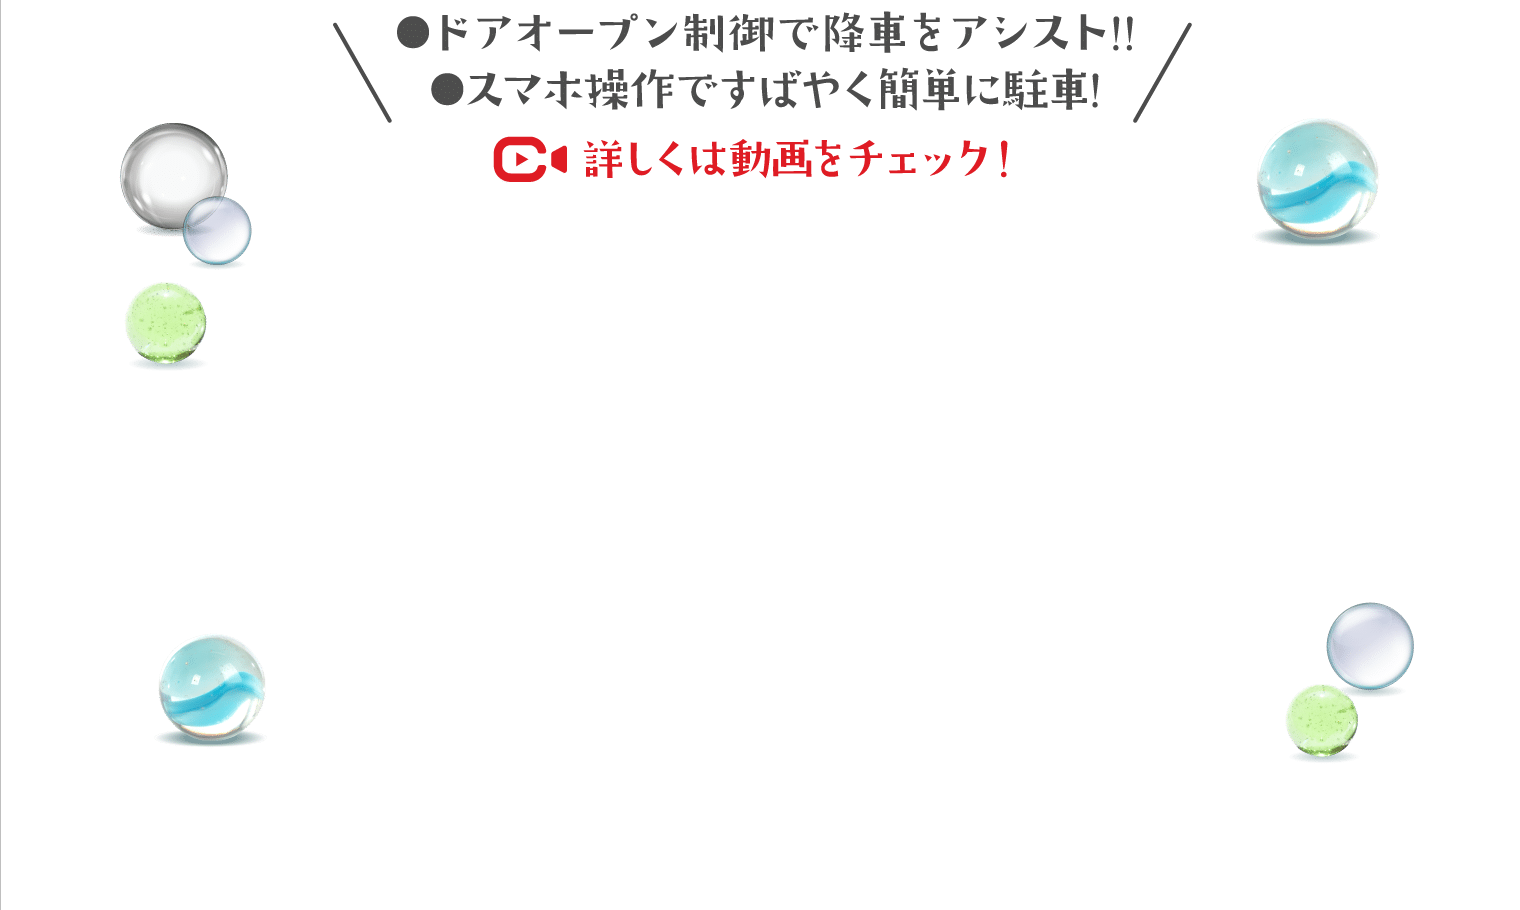 04 CREDIT 新型NOAH が 月々24,200円で乗れる!!